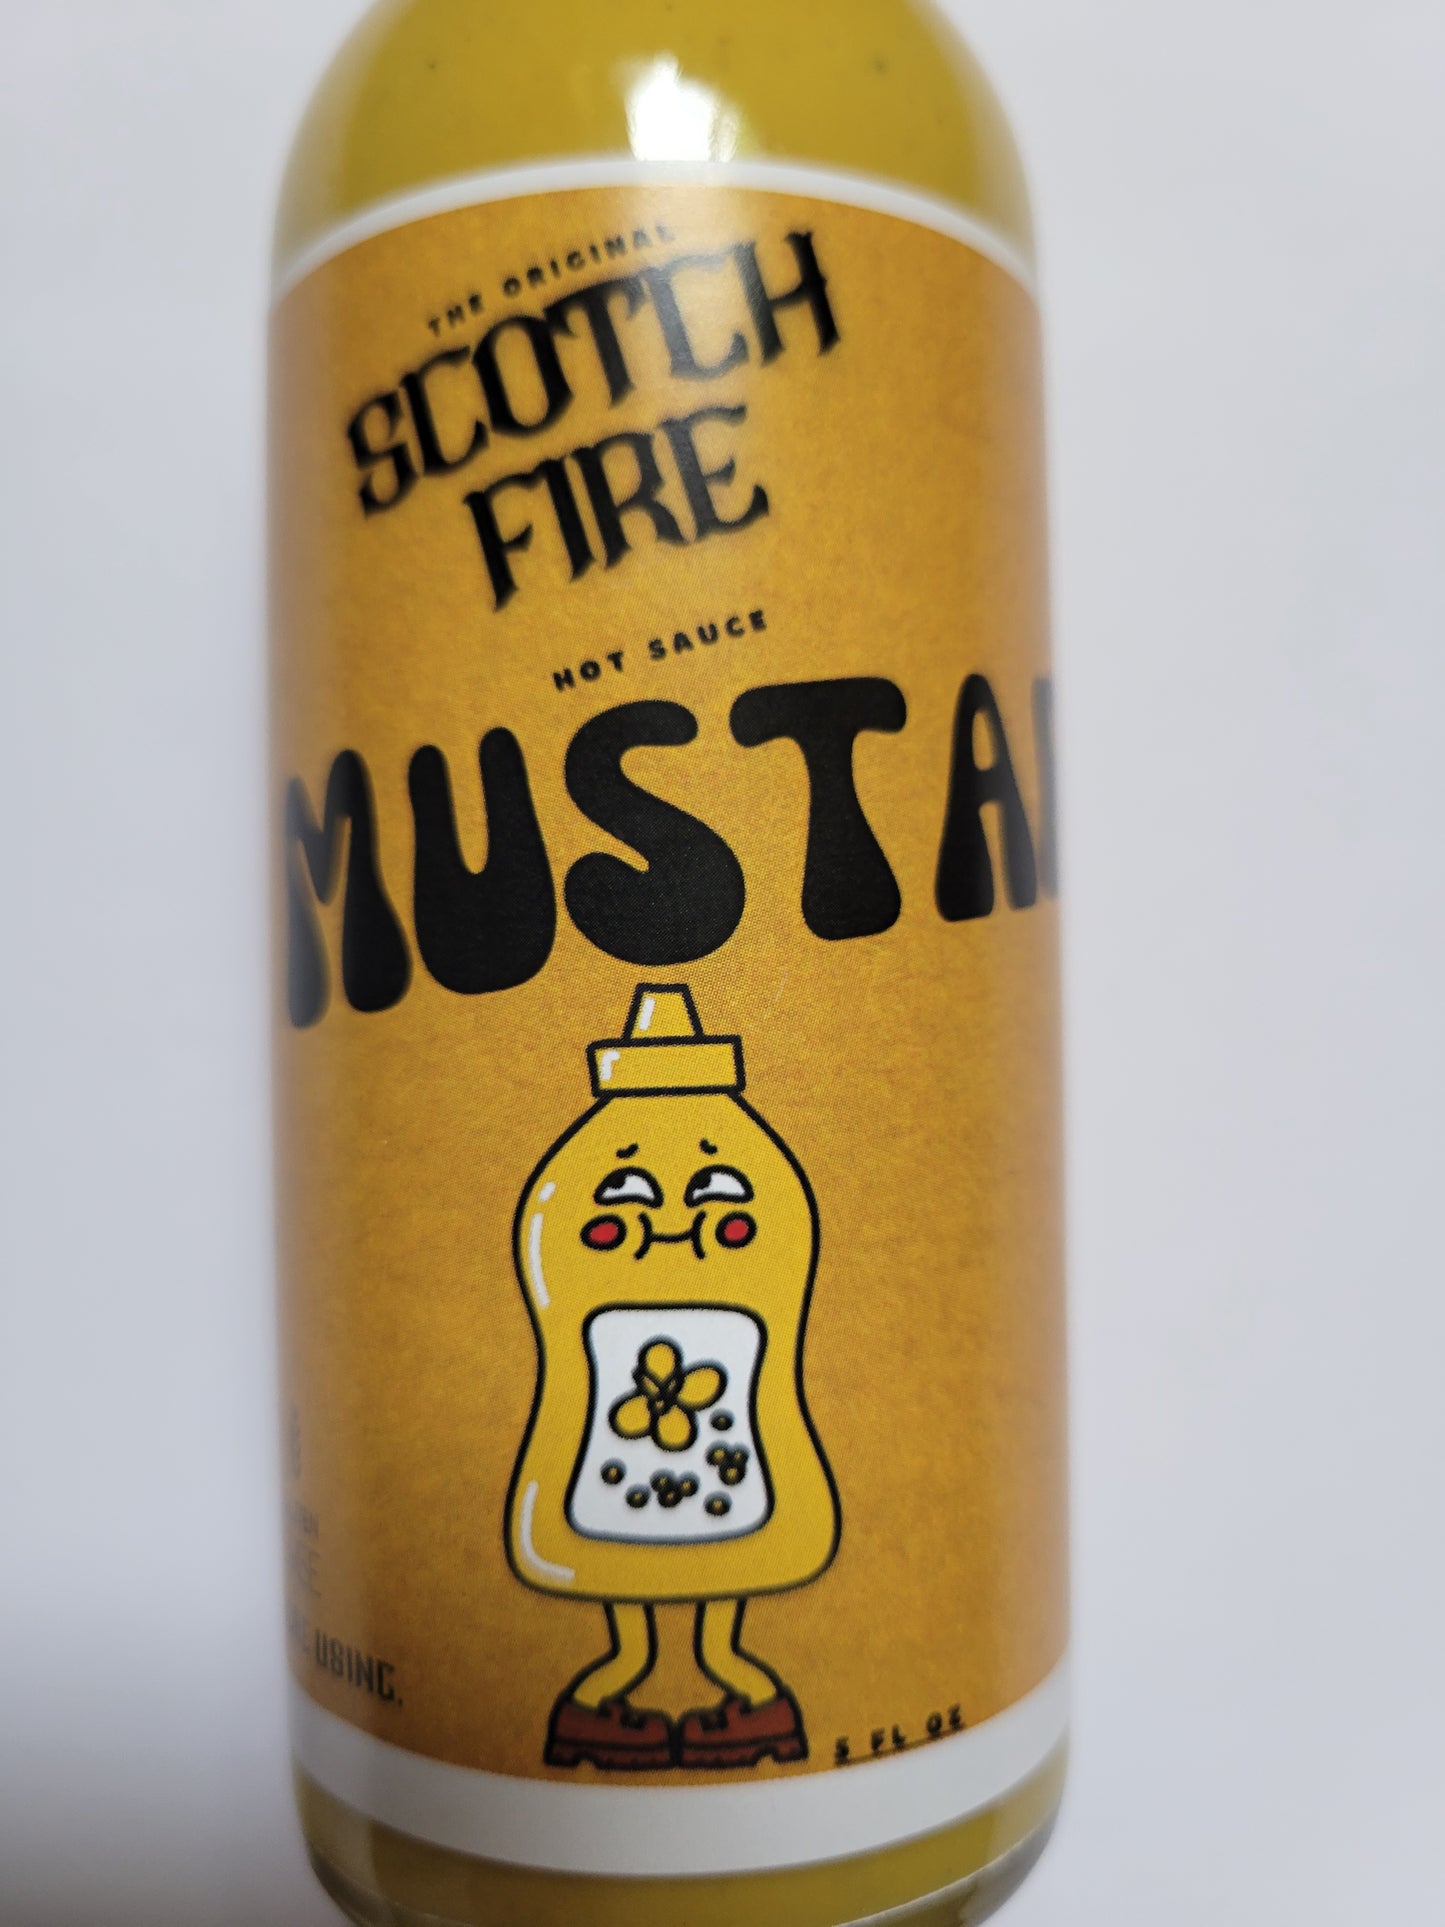 Scotch Fire Mustard